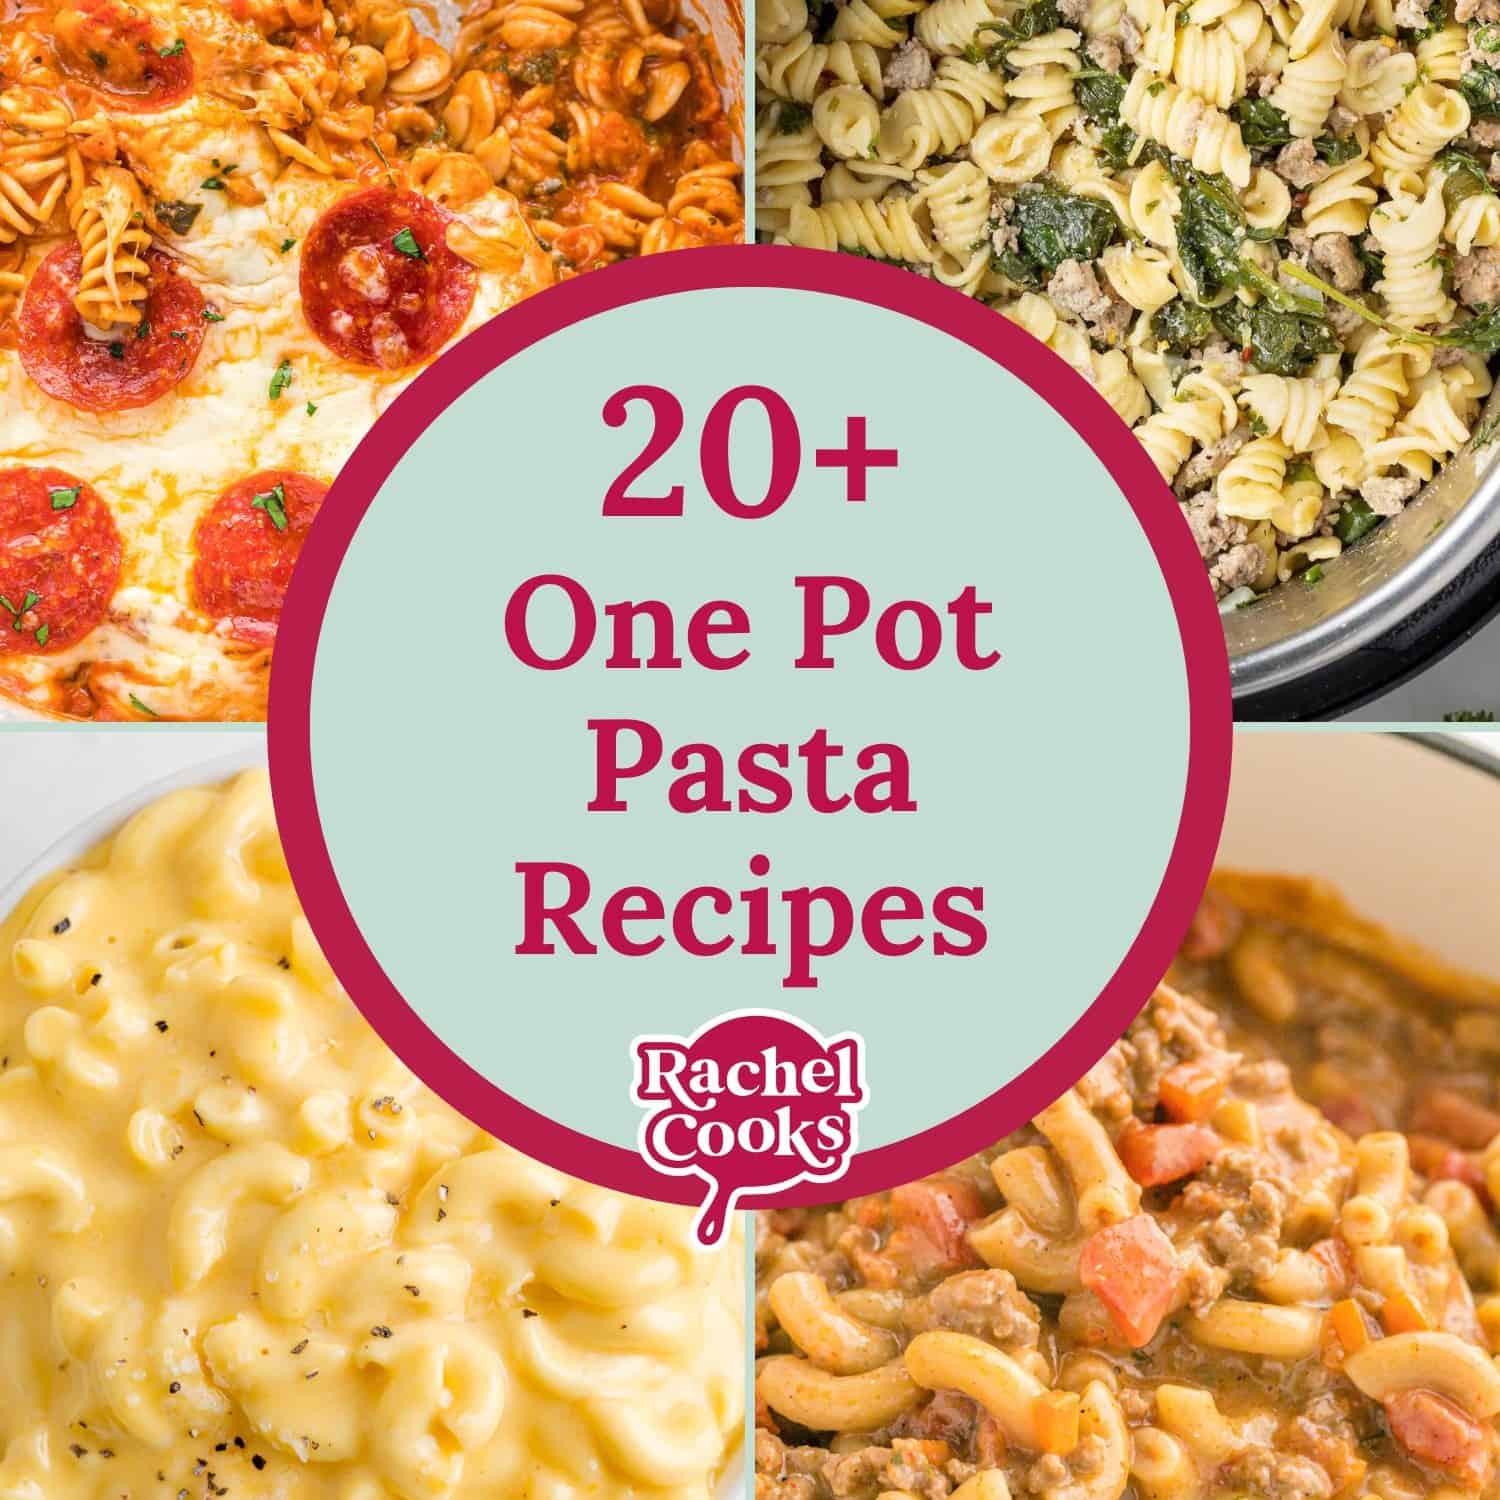 One Pot Pasta Recipes – over 20 easy recipes!